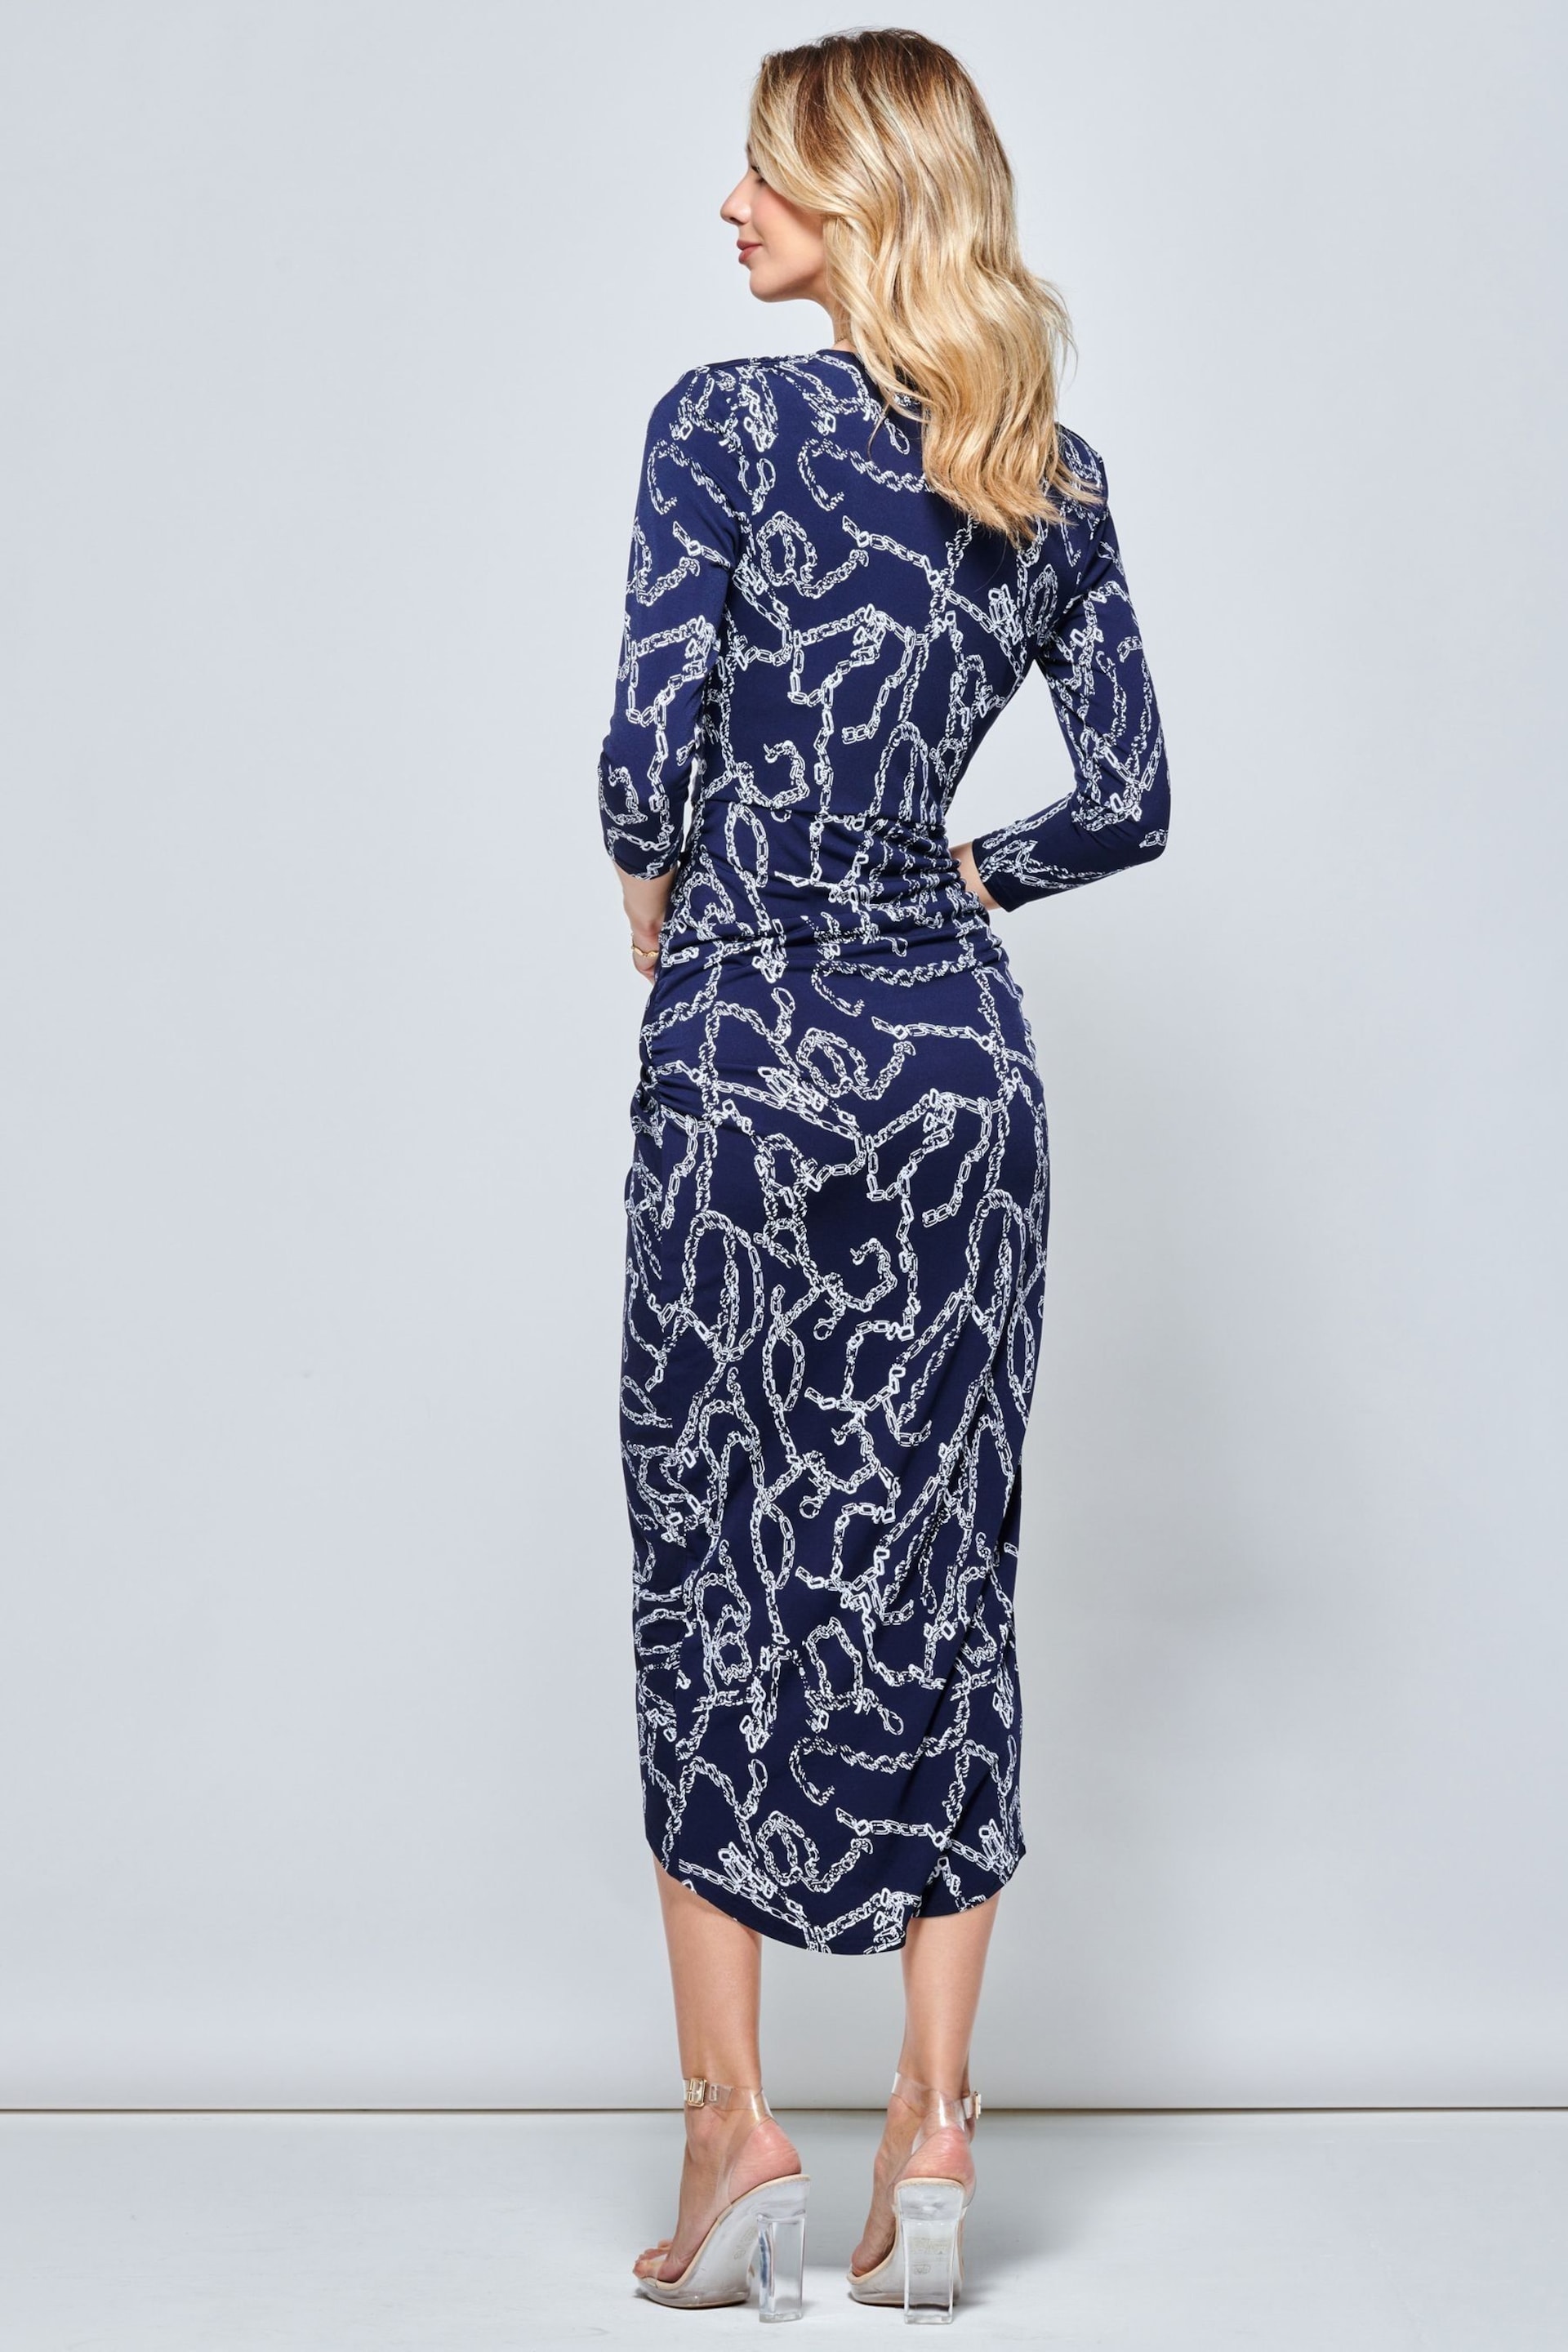 Jolie Moi Blue Print Wrap Front Bodycon Maxi Dress - Image 2 of 6